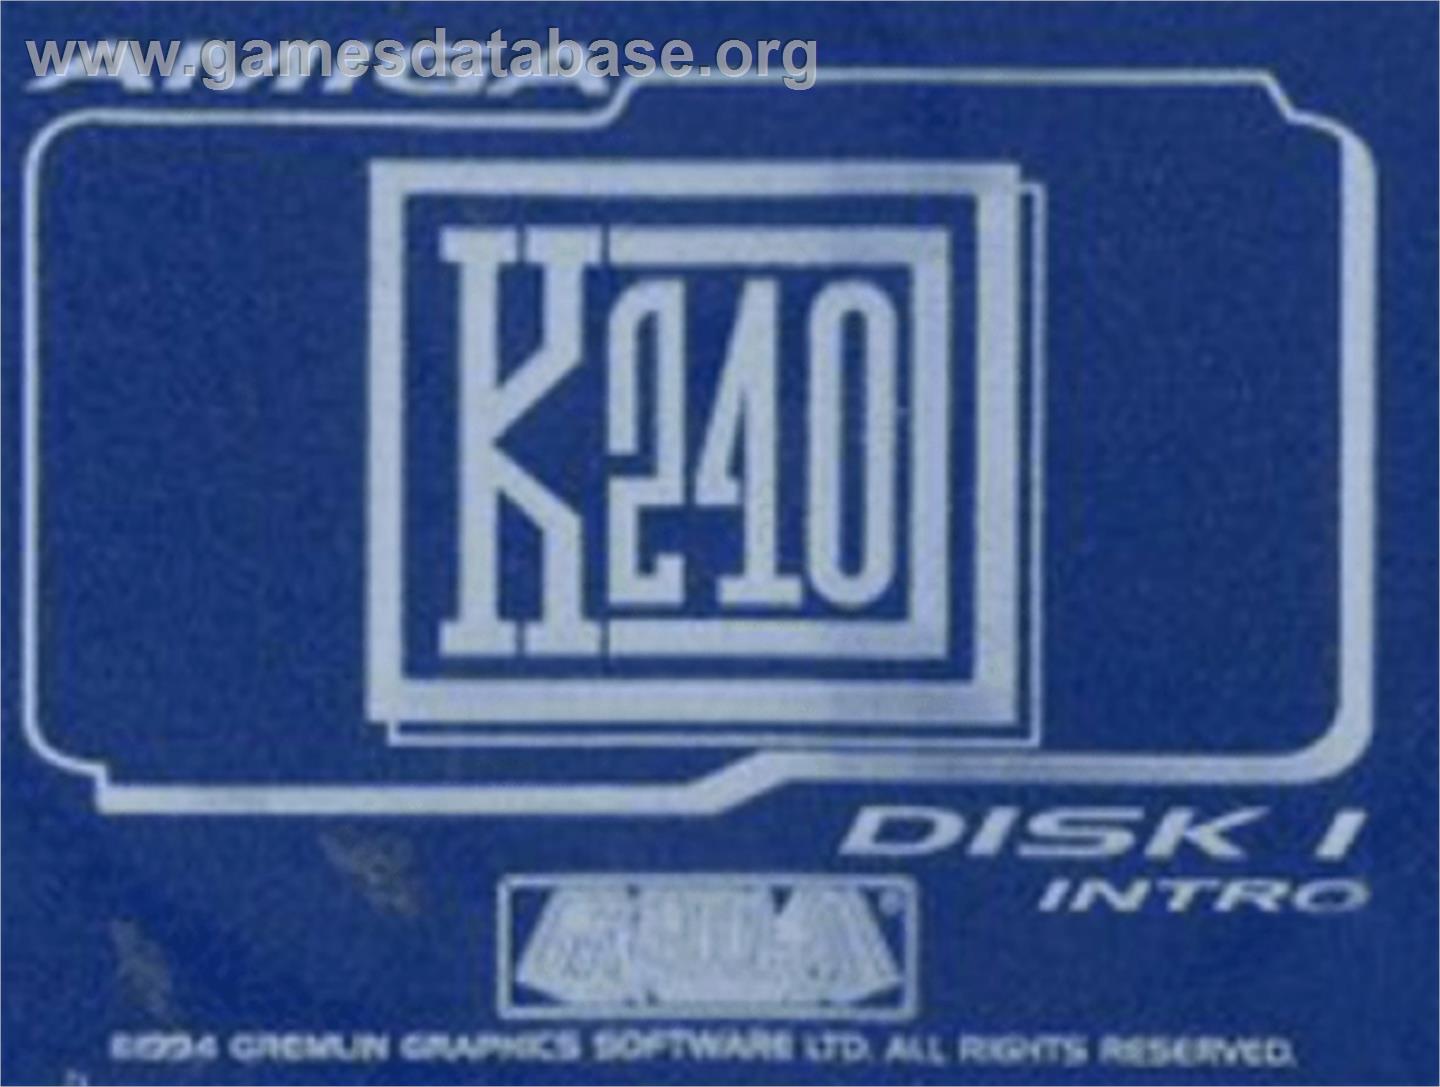 K240 - Commodore Amiga - Artwork - Cartridge Top